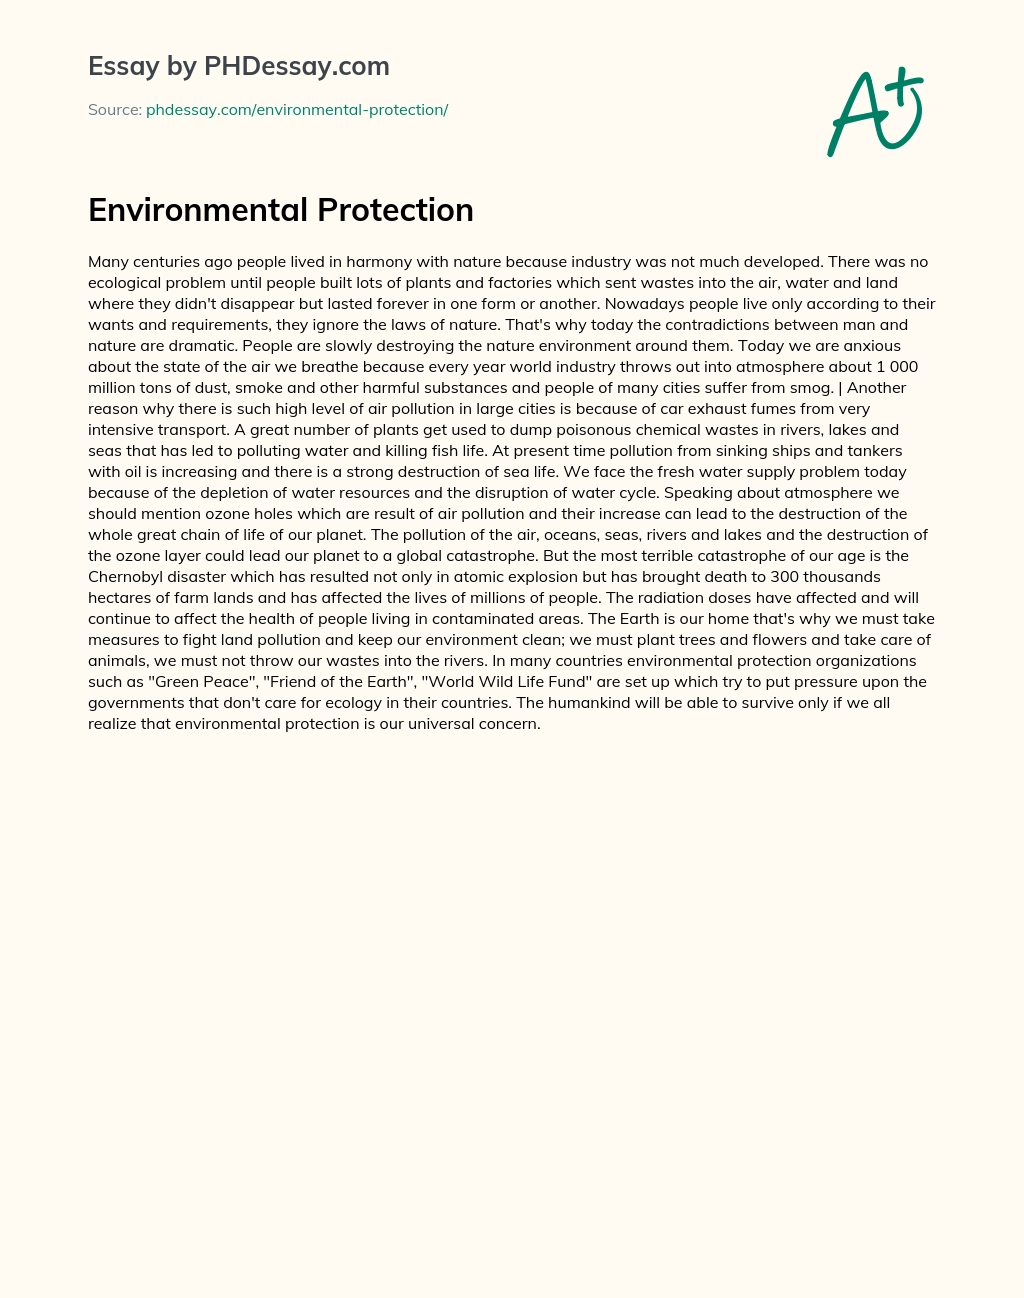 Environmental Protection essay